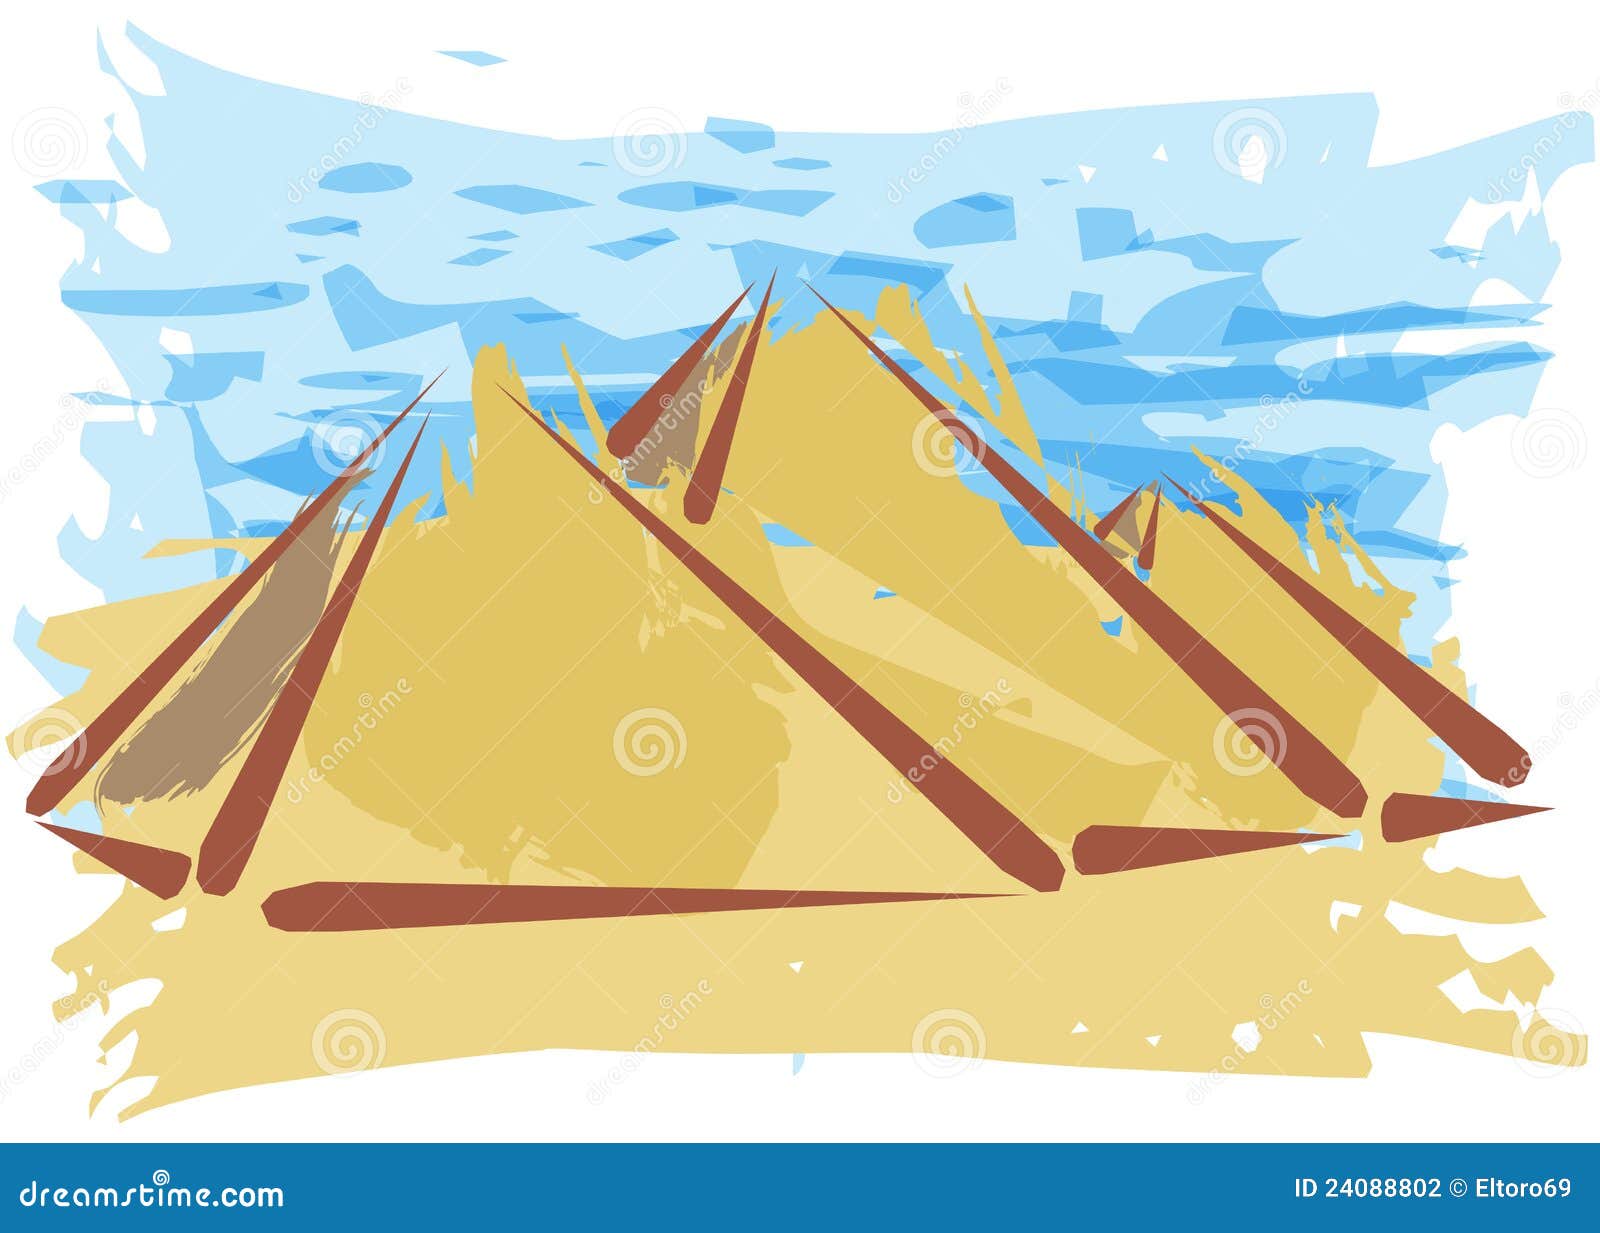 pyramide, travel desitnation